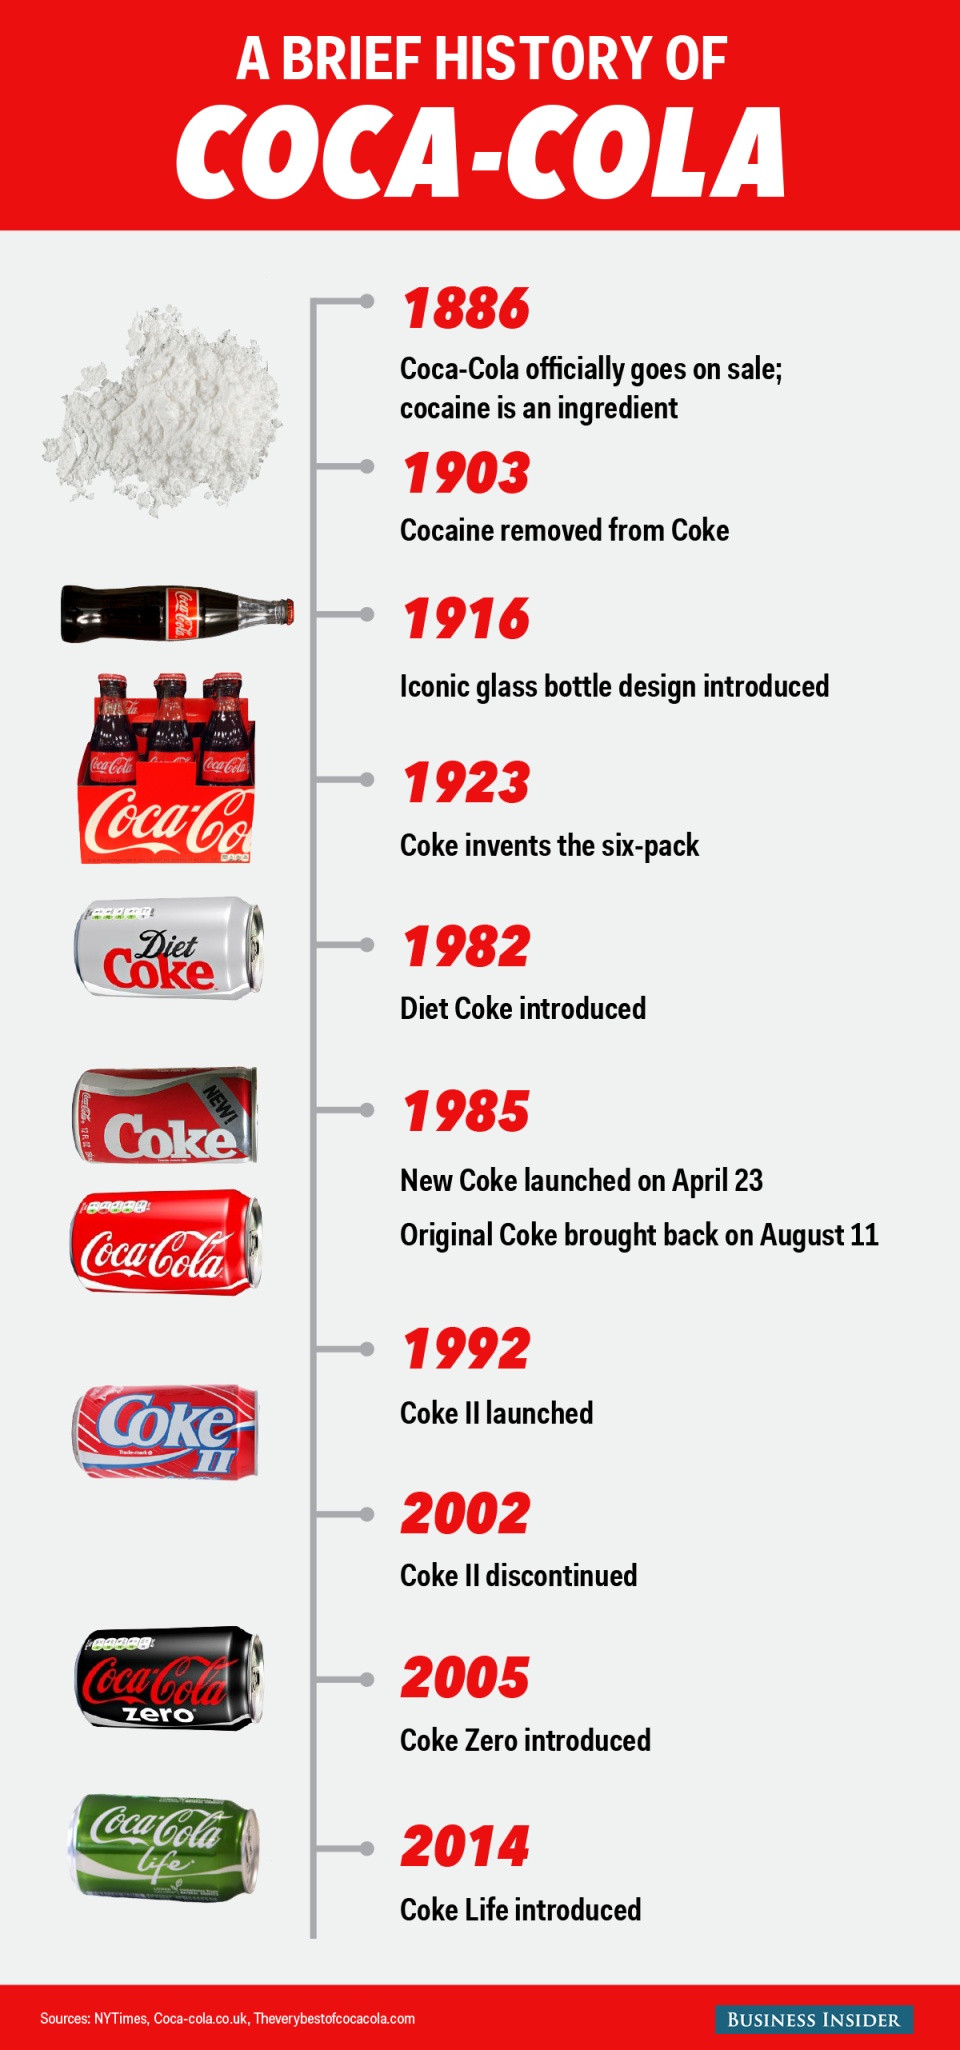 Coca-cola timeline history